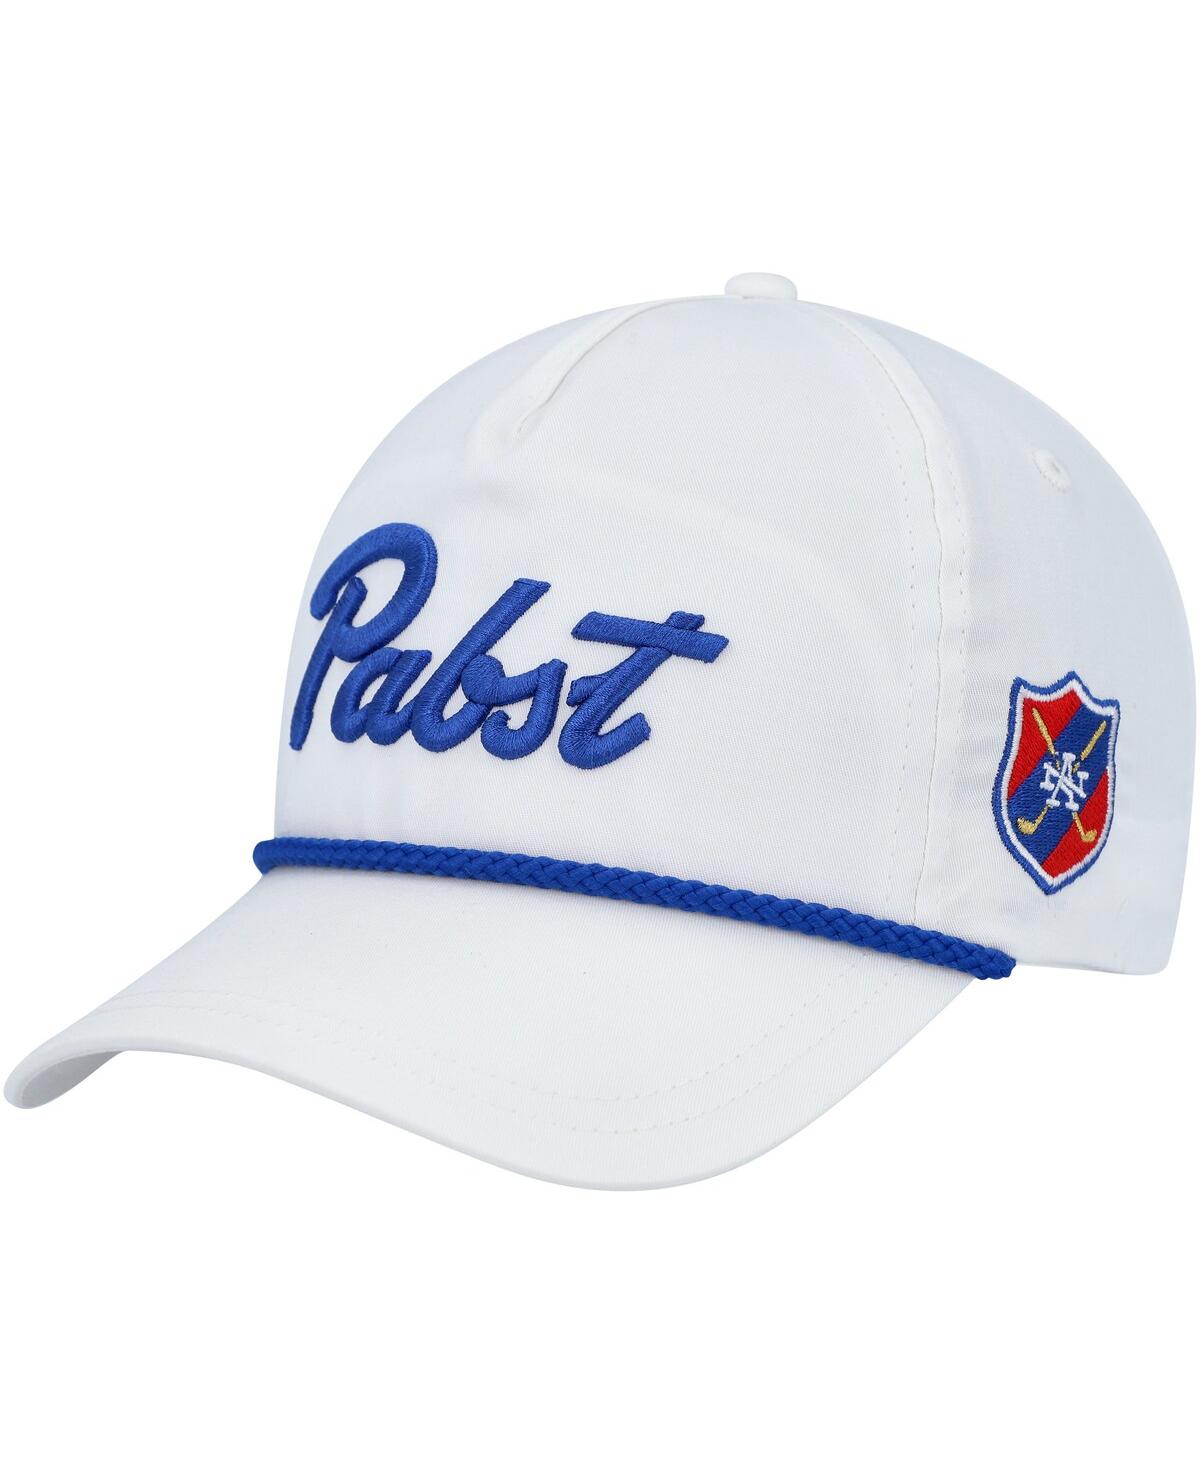 American Needle Men's  White Pabst Blue Ribbon Rope Snapback Hat